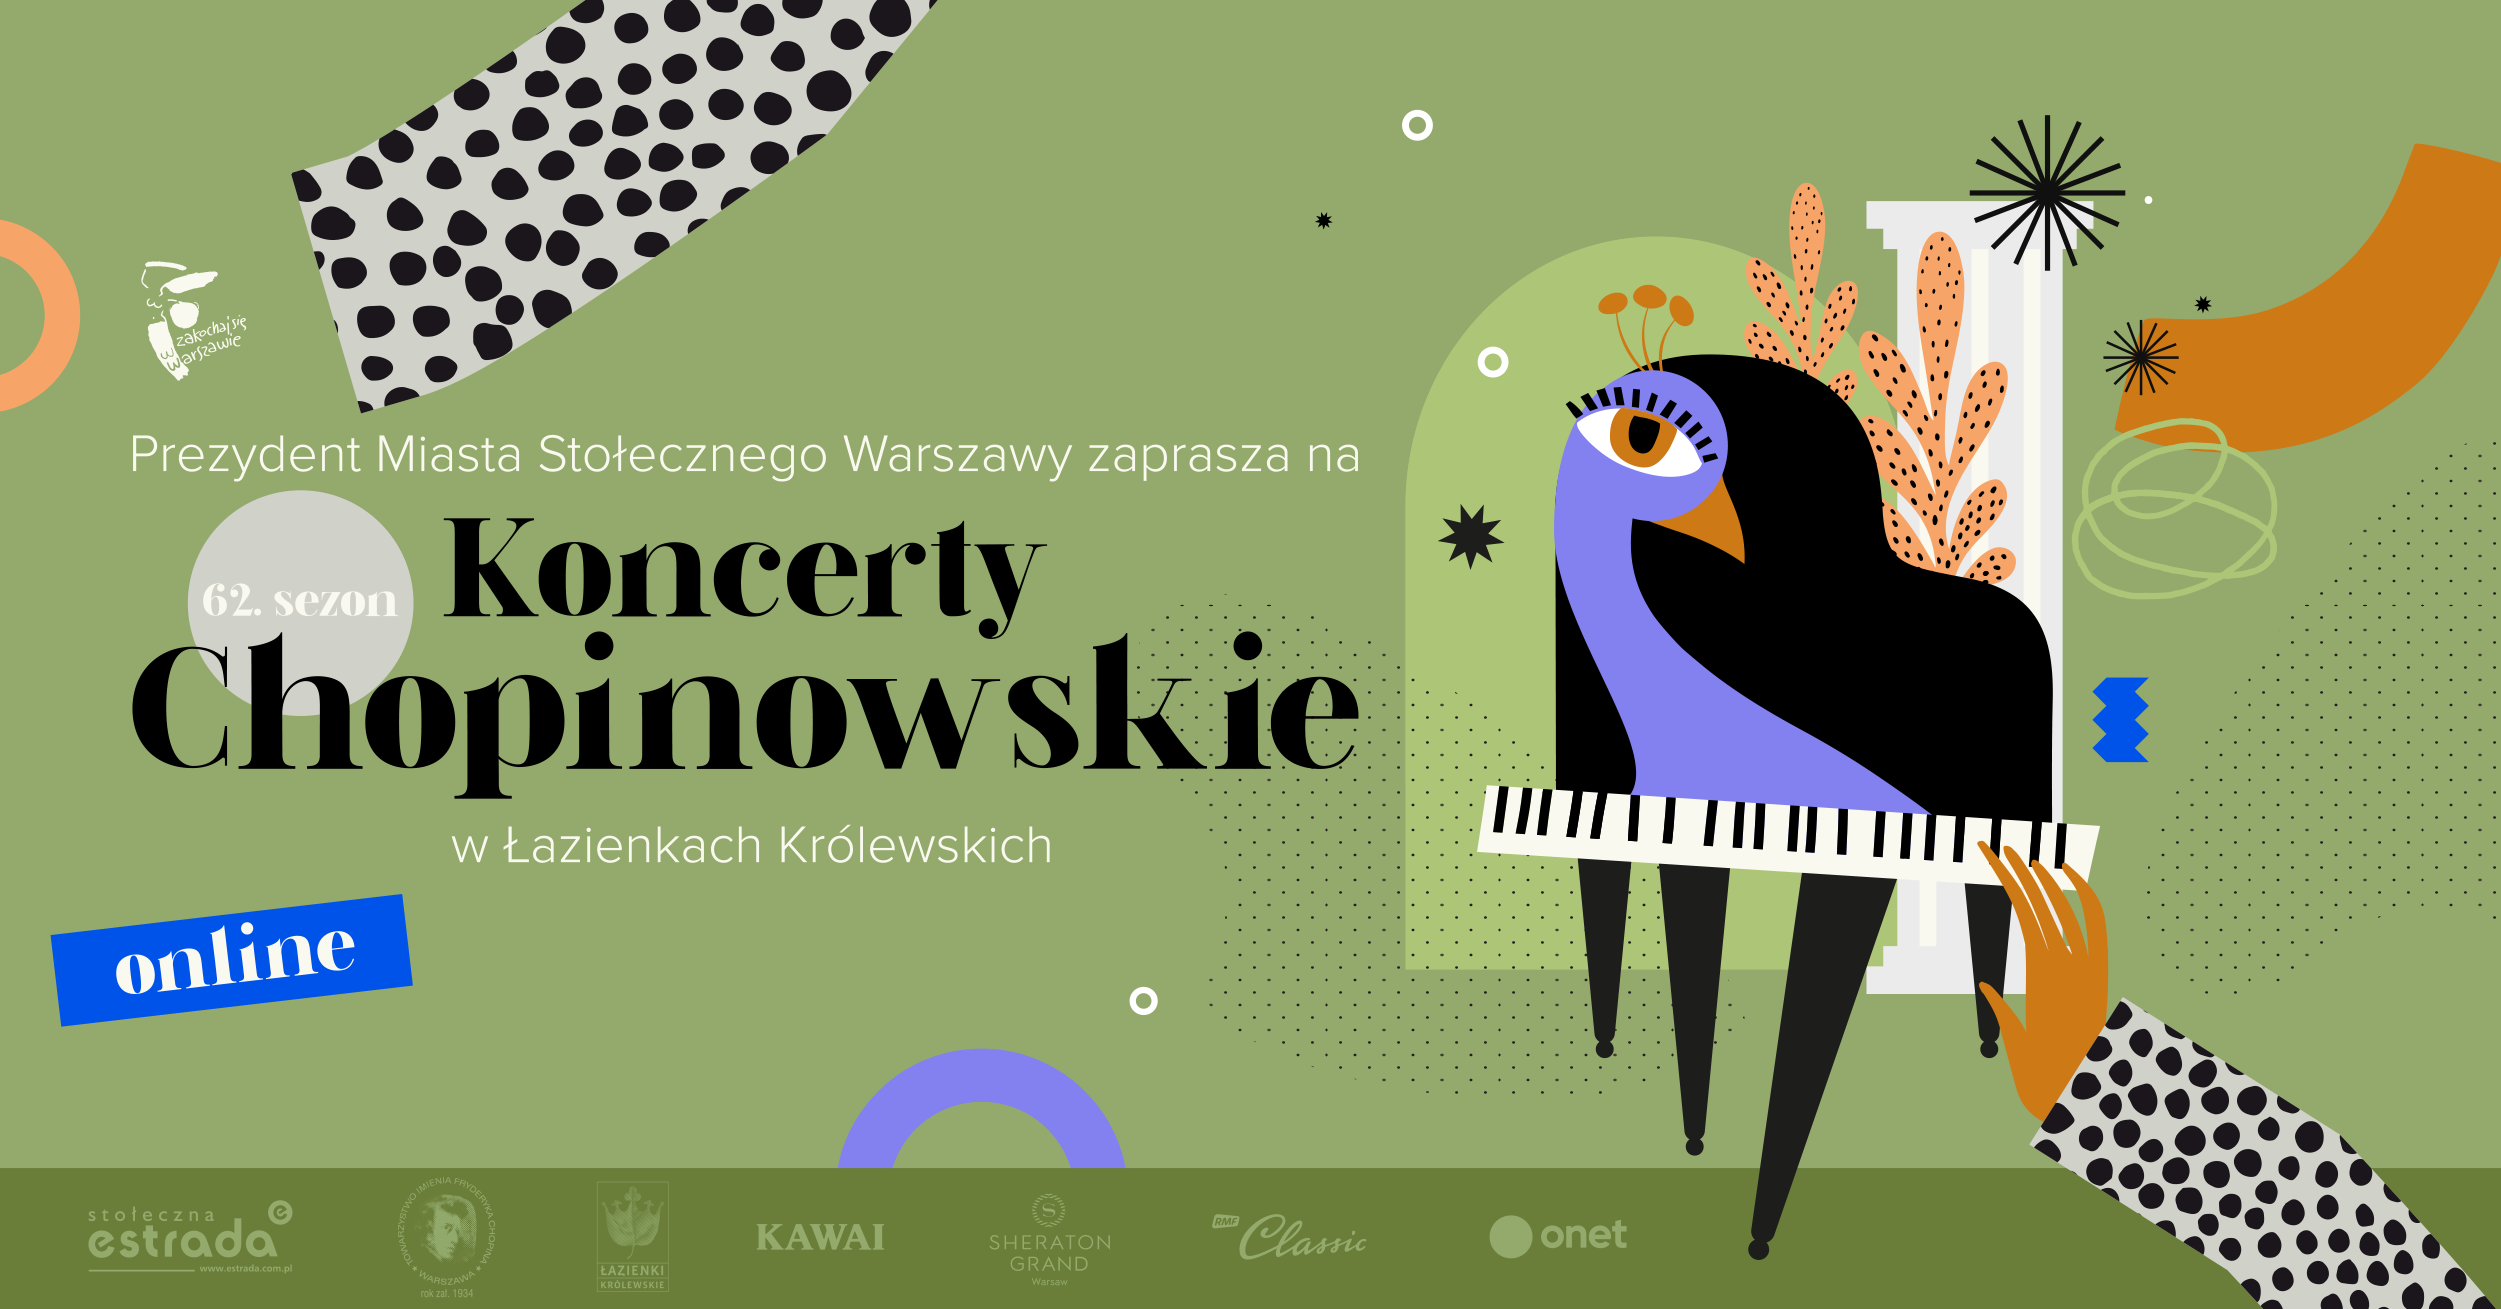 Koncerty Chopinowskie w Łazienkach Królewskich online 2021 - Yukino Hayashi - Chopin concerts